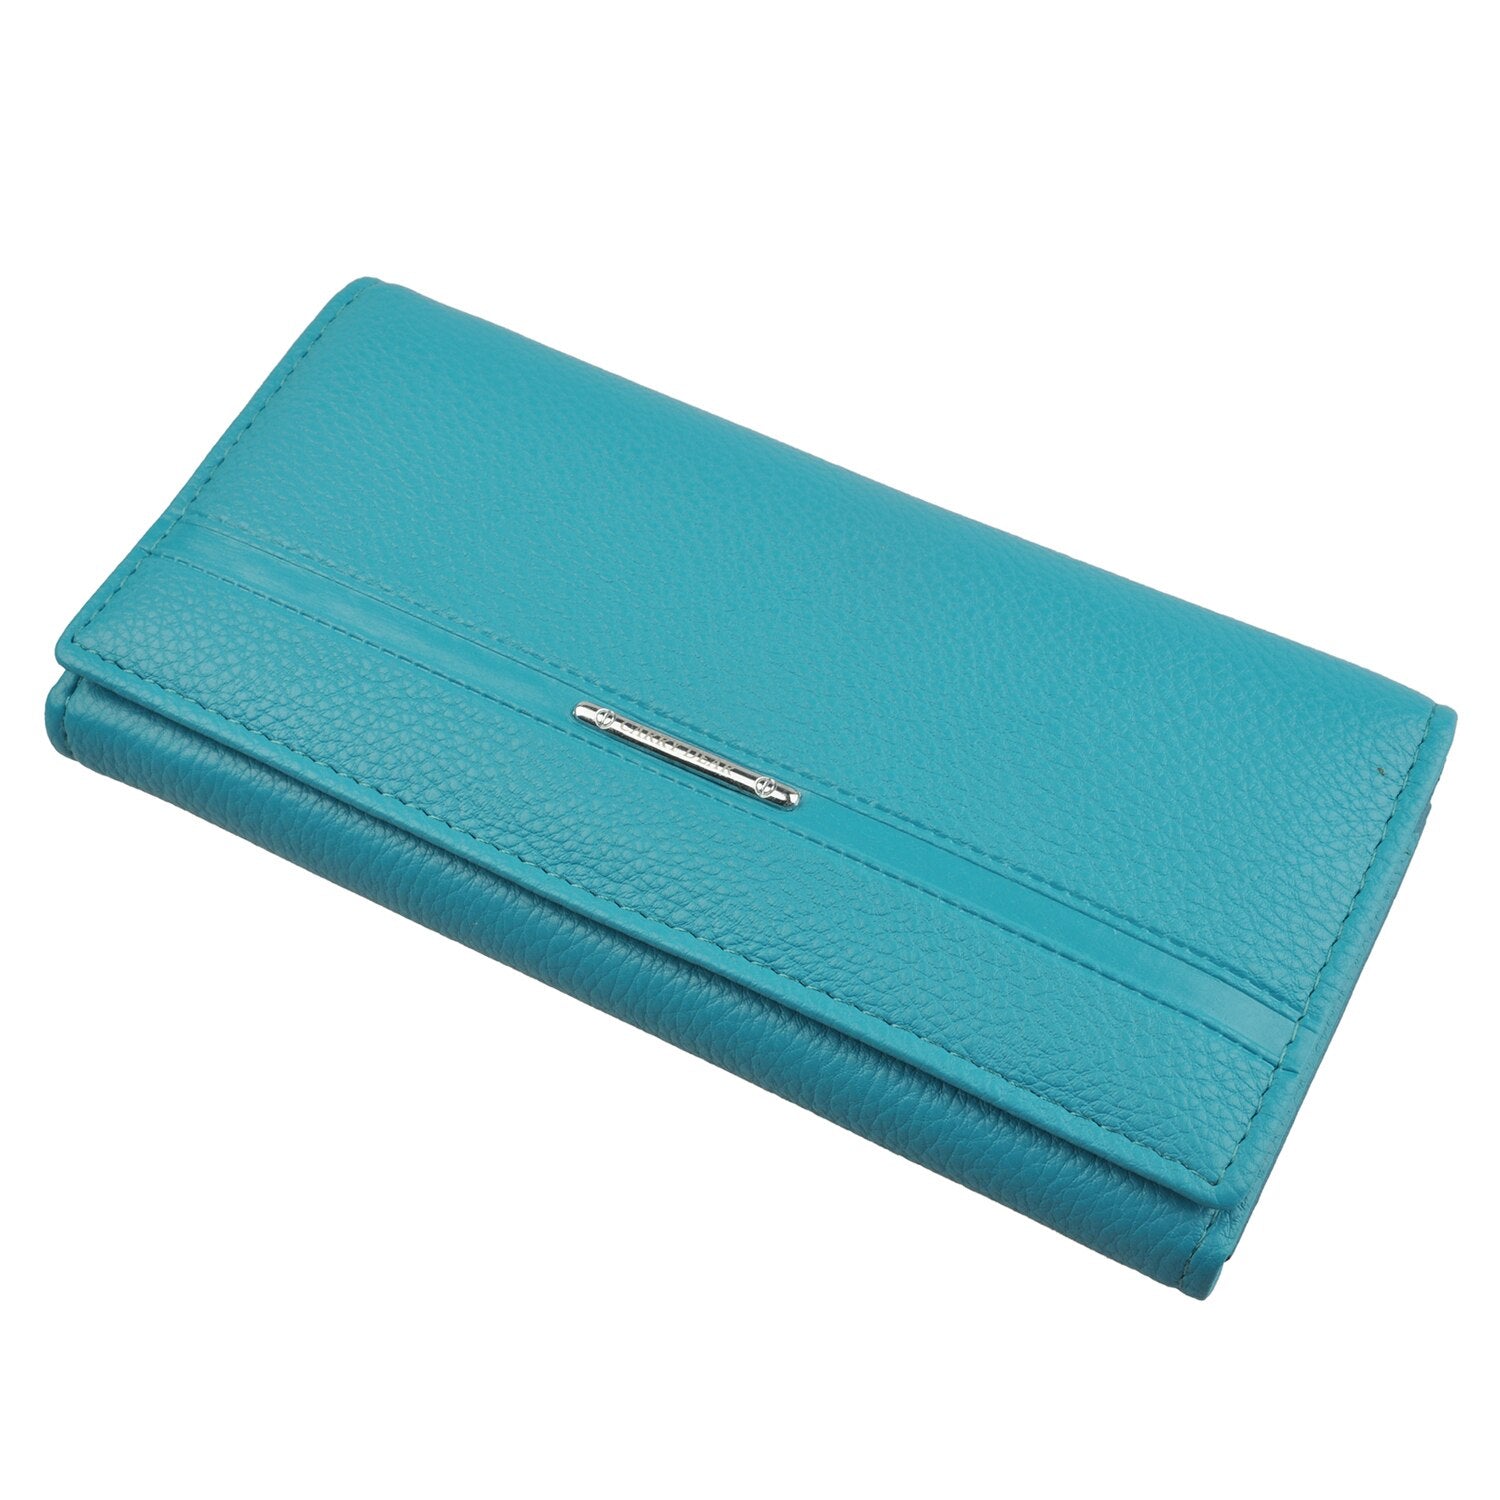 Wallet Women Wallet Clutch Long Design Clip Wallet Long Wallets Coin Purse Bag blue - ebowsos